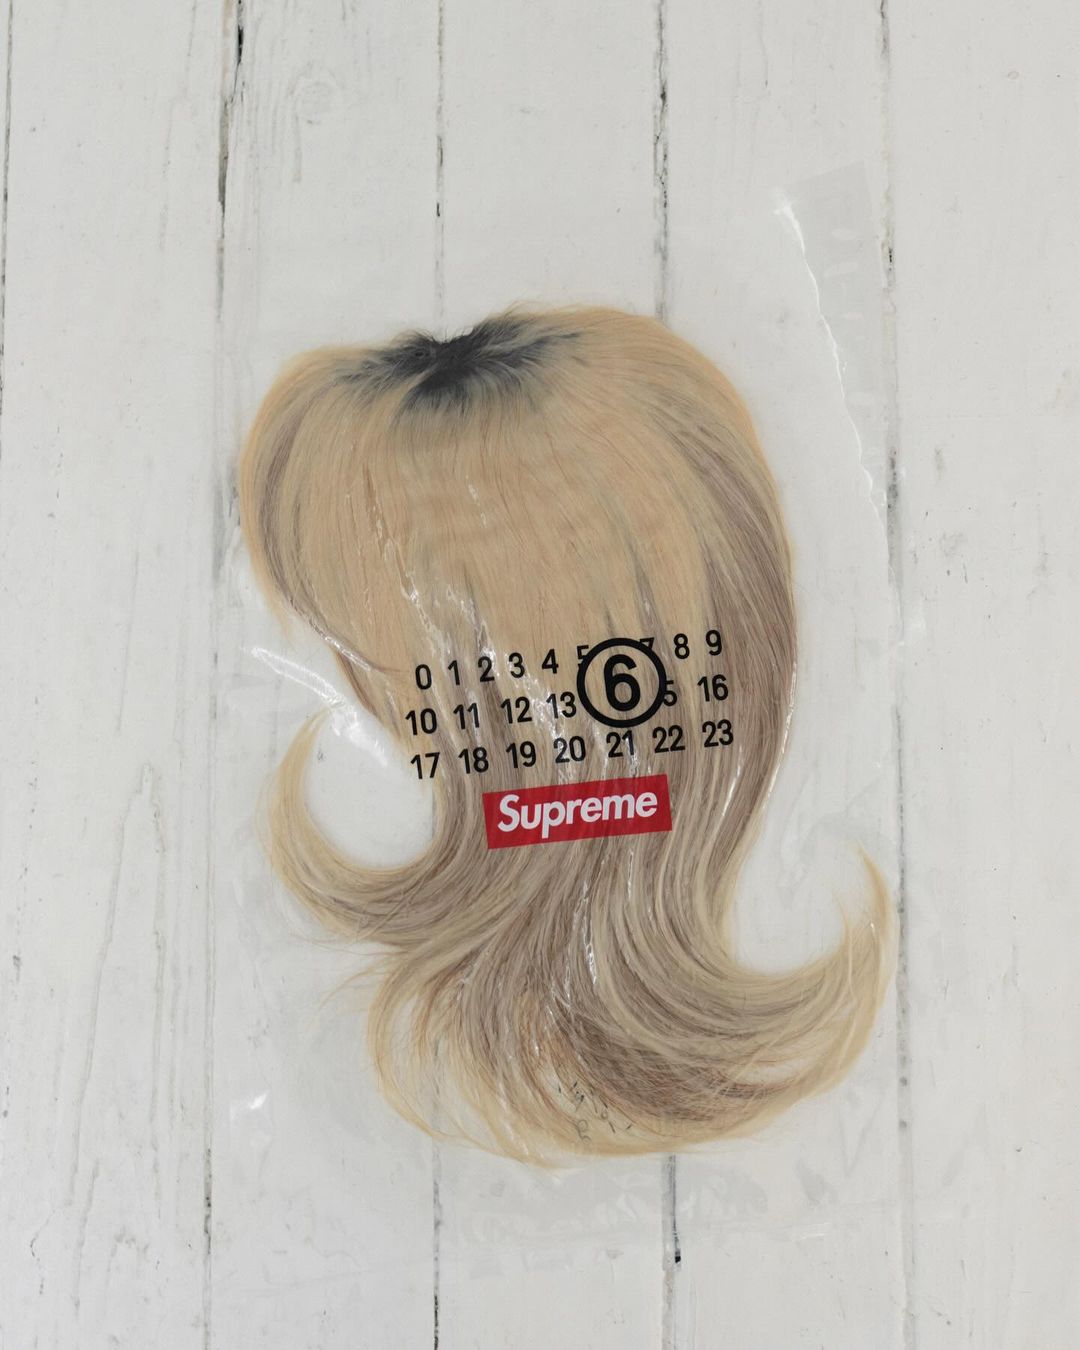 Supreme & Maison Margiela hair